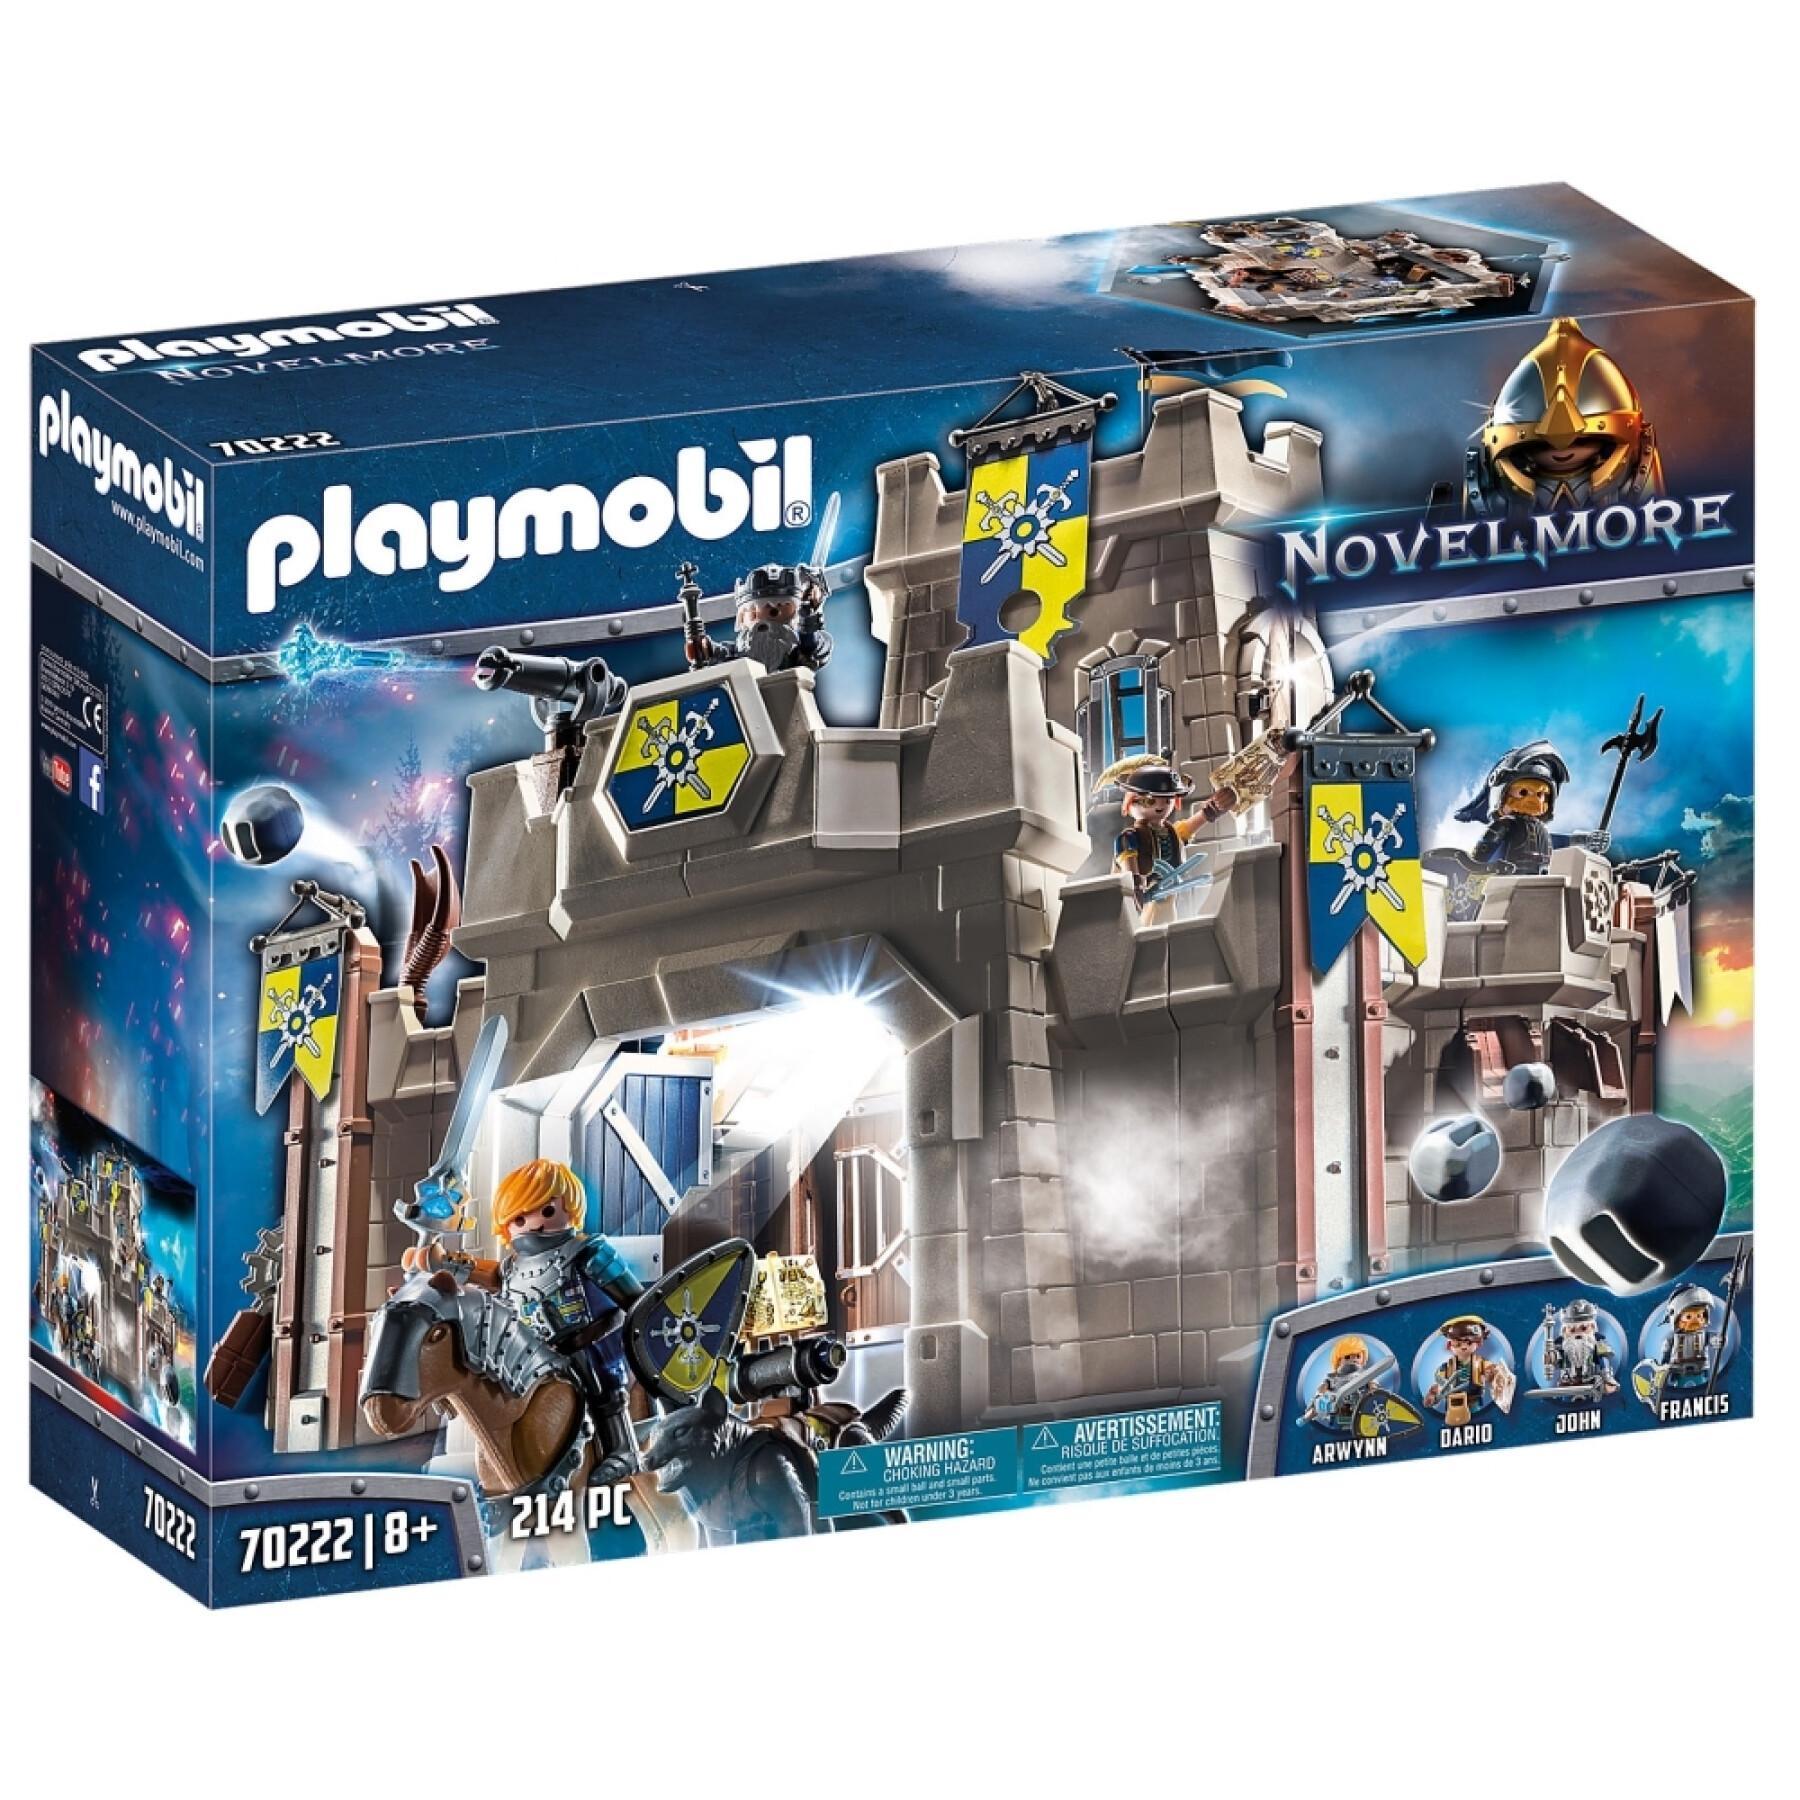 Fortaleza de novelmore Playmobil